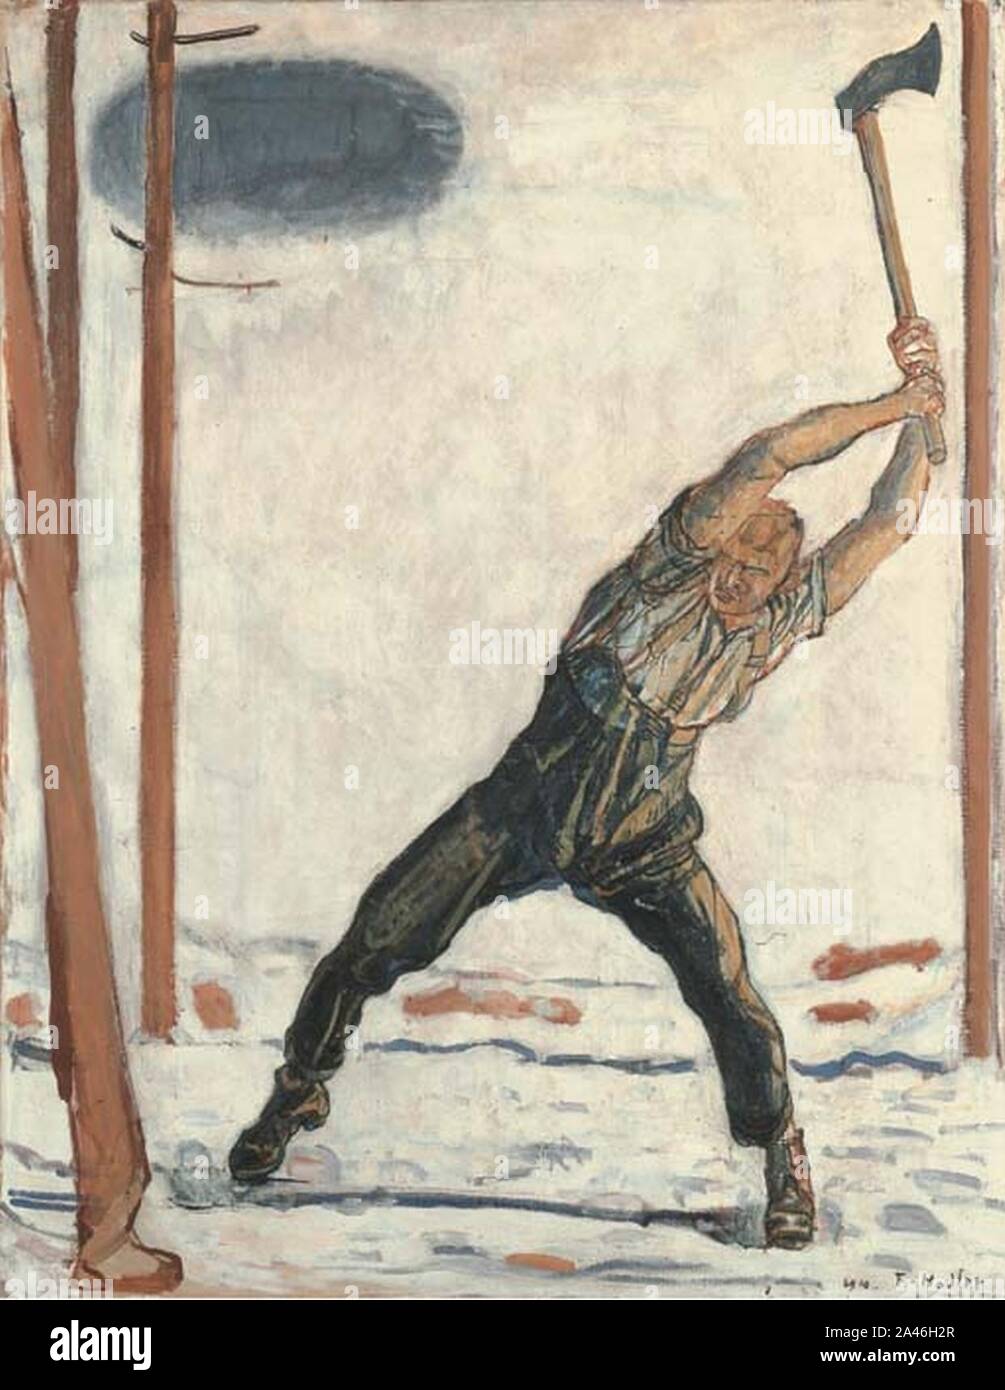 Ferdinand Hodler - Der Holzfäller, 1910. Stock Photo